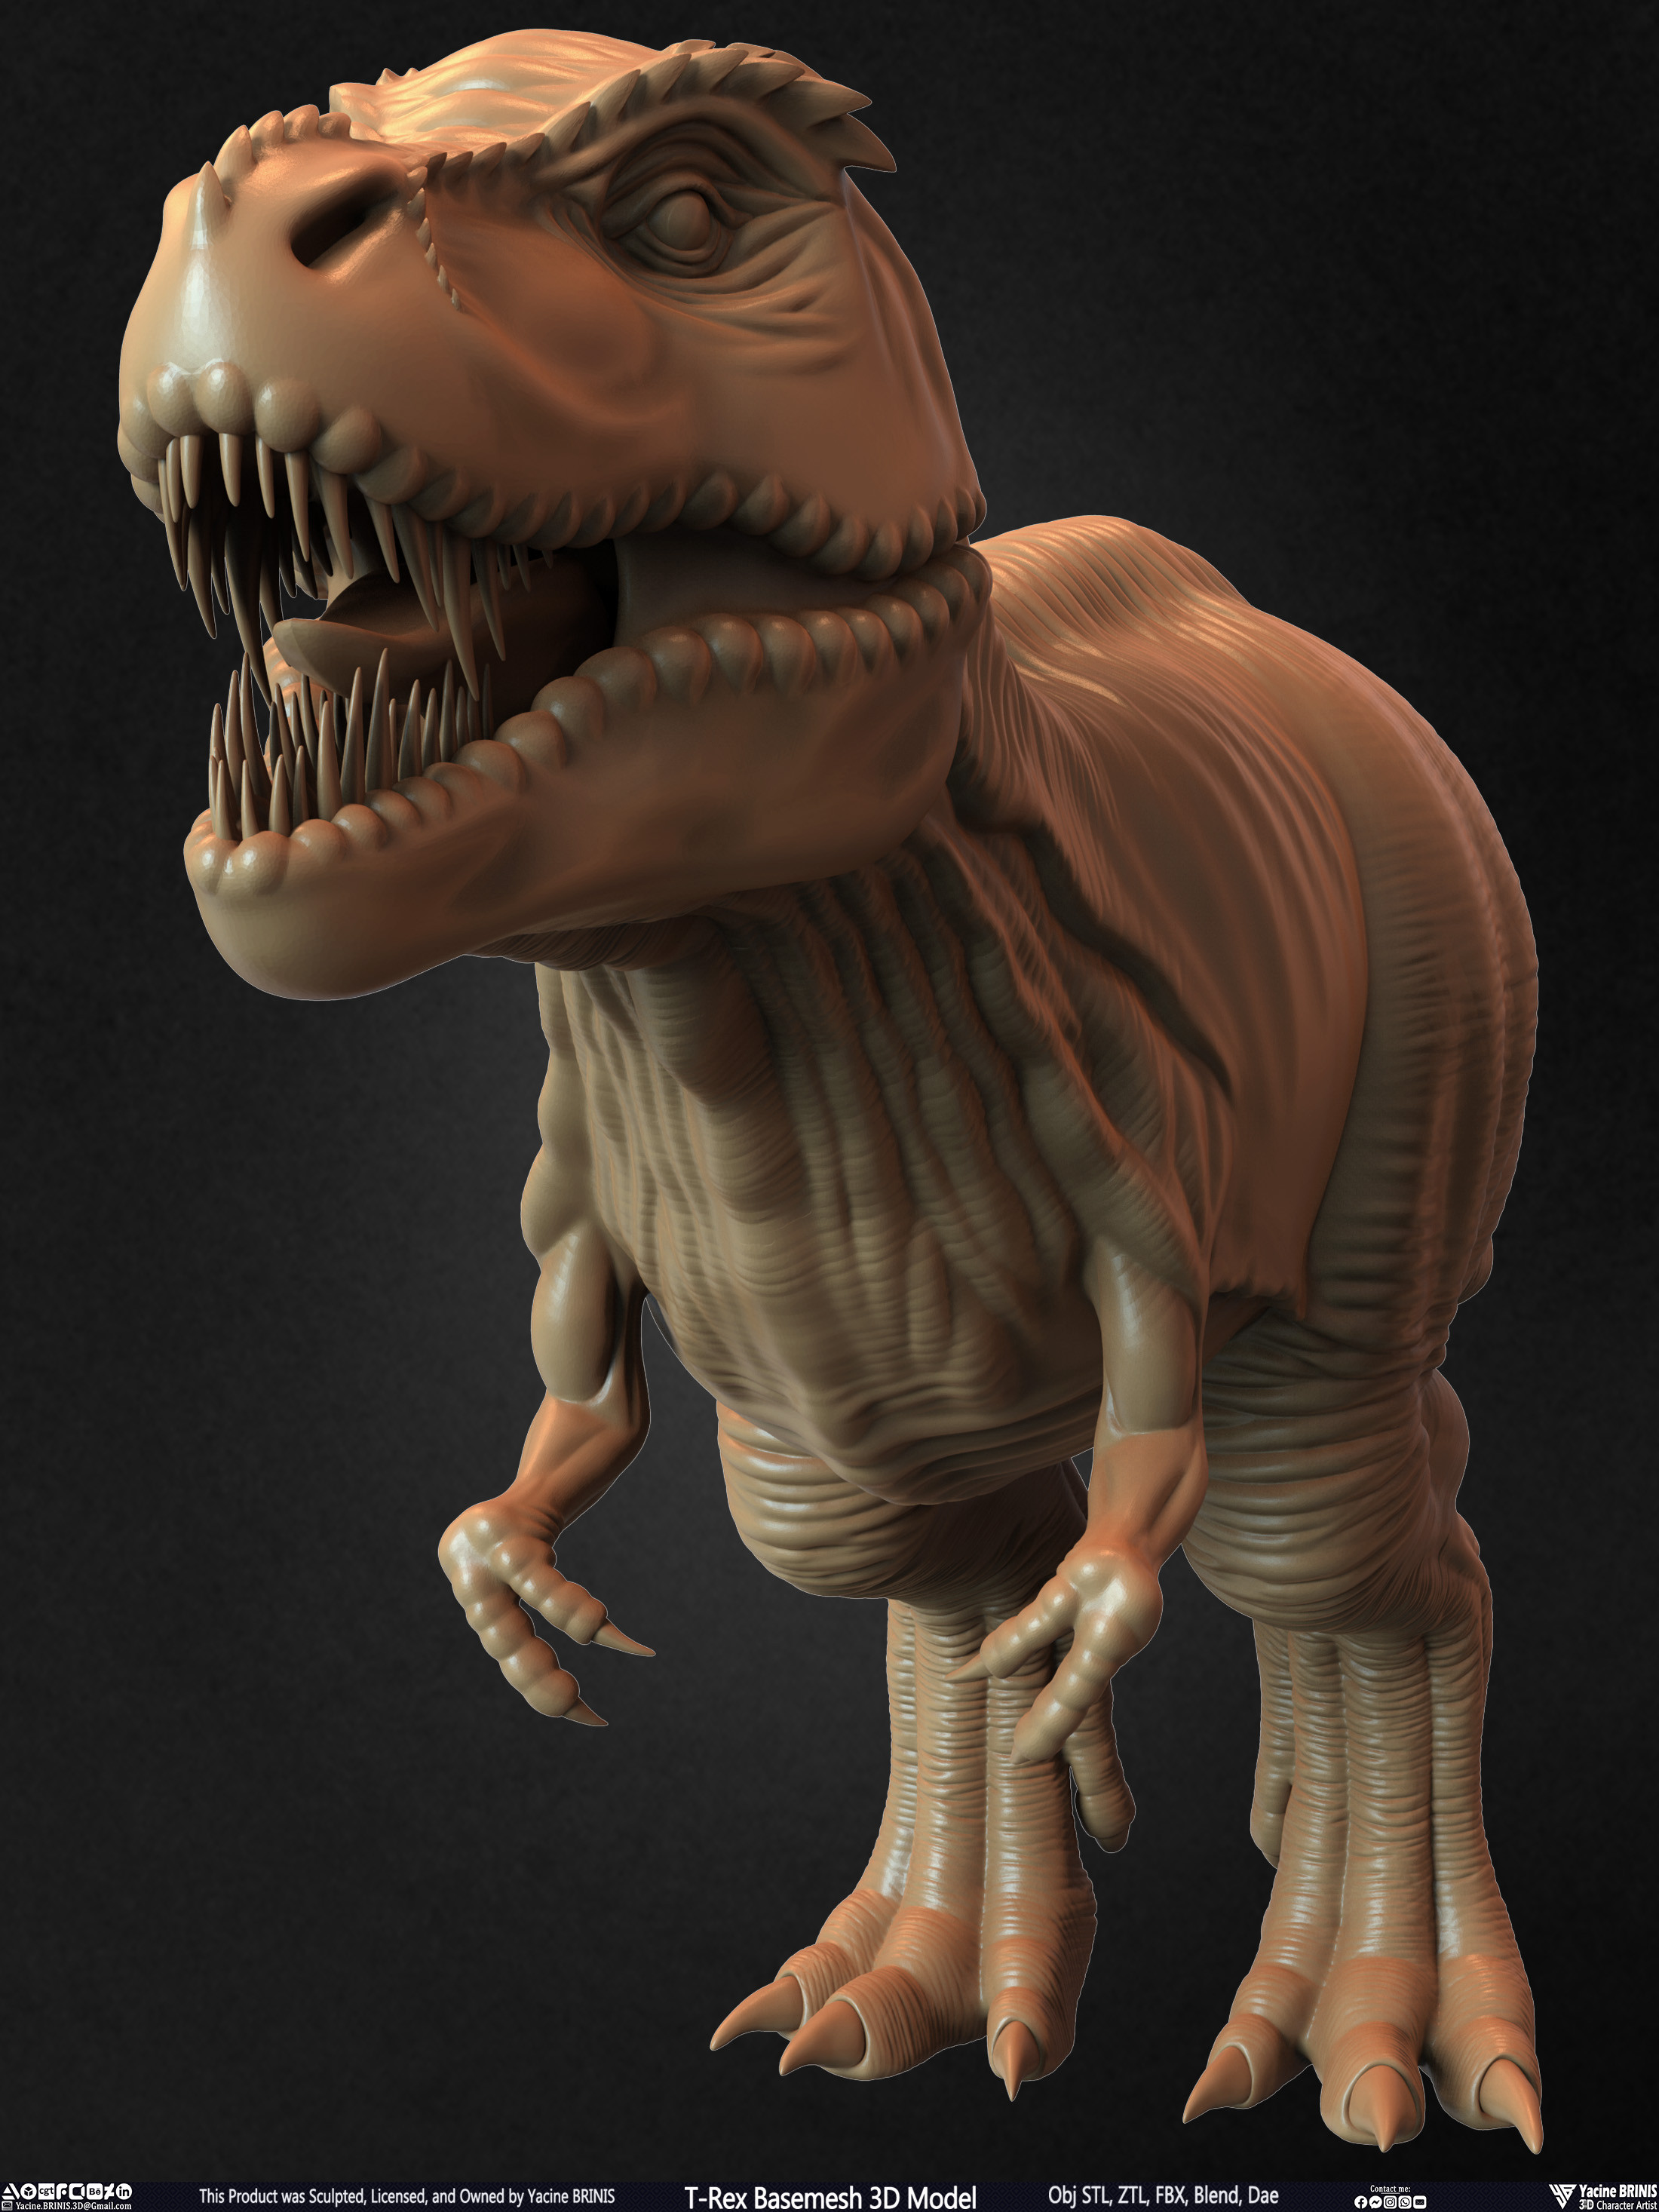 T-Rex Basemesh 3D Model (Tyrannosaurus Rex) Sculpted By Yacine BRINIS Set 012